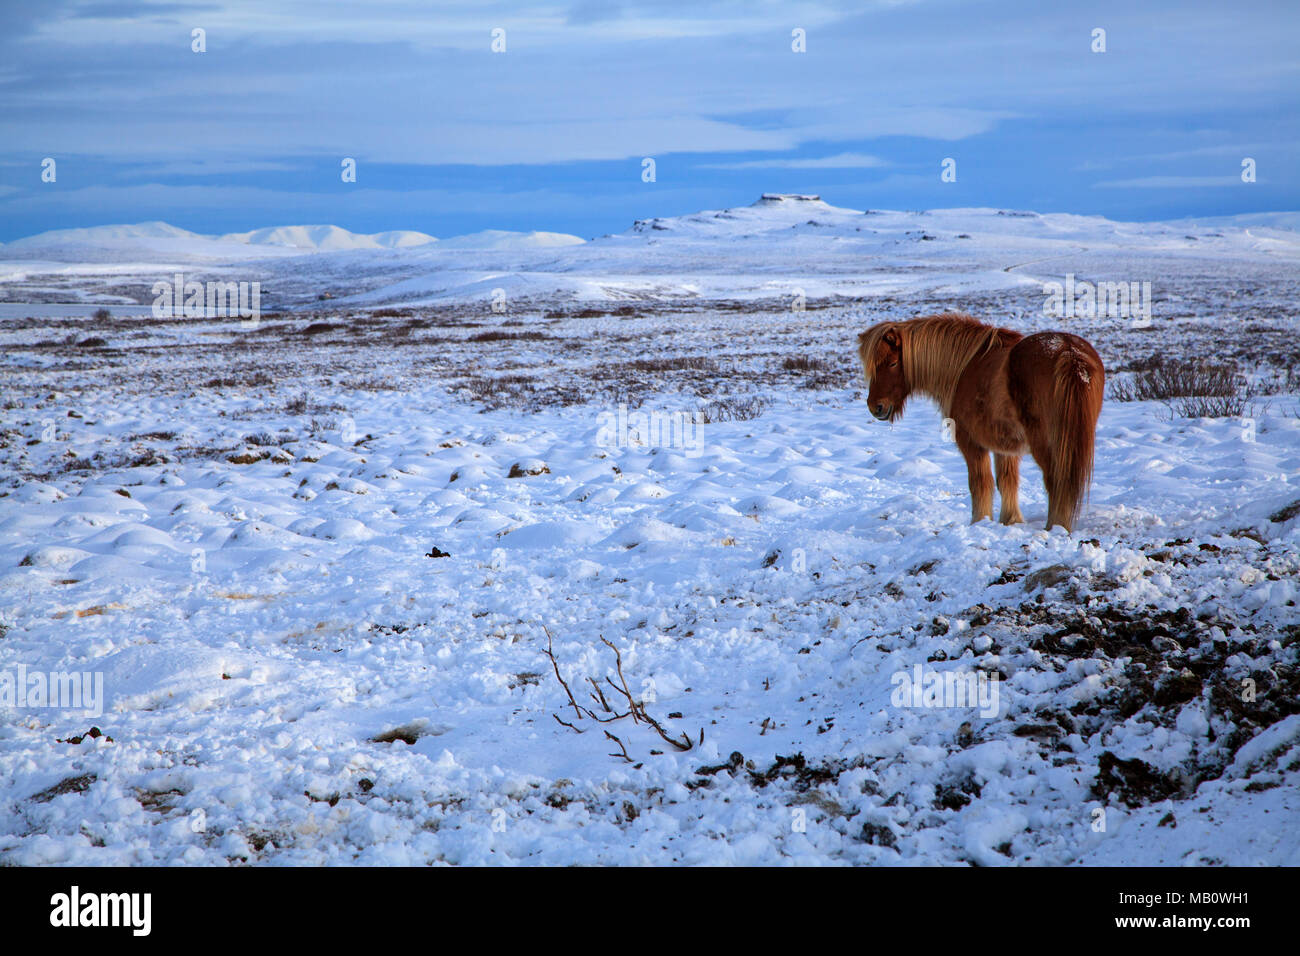 Mountains, Europe, Island, Iceland horses, sceneries, horses, snow, mammals, animals, volcano island, winter Stock Photo